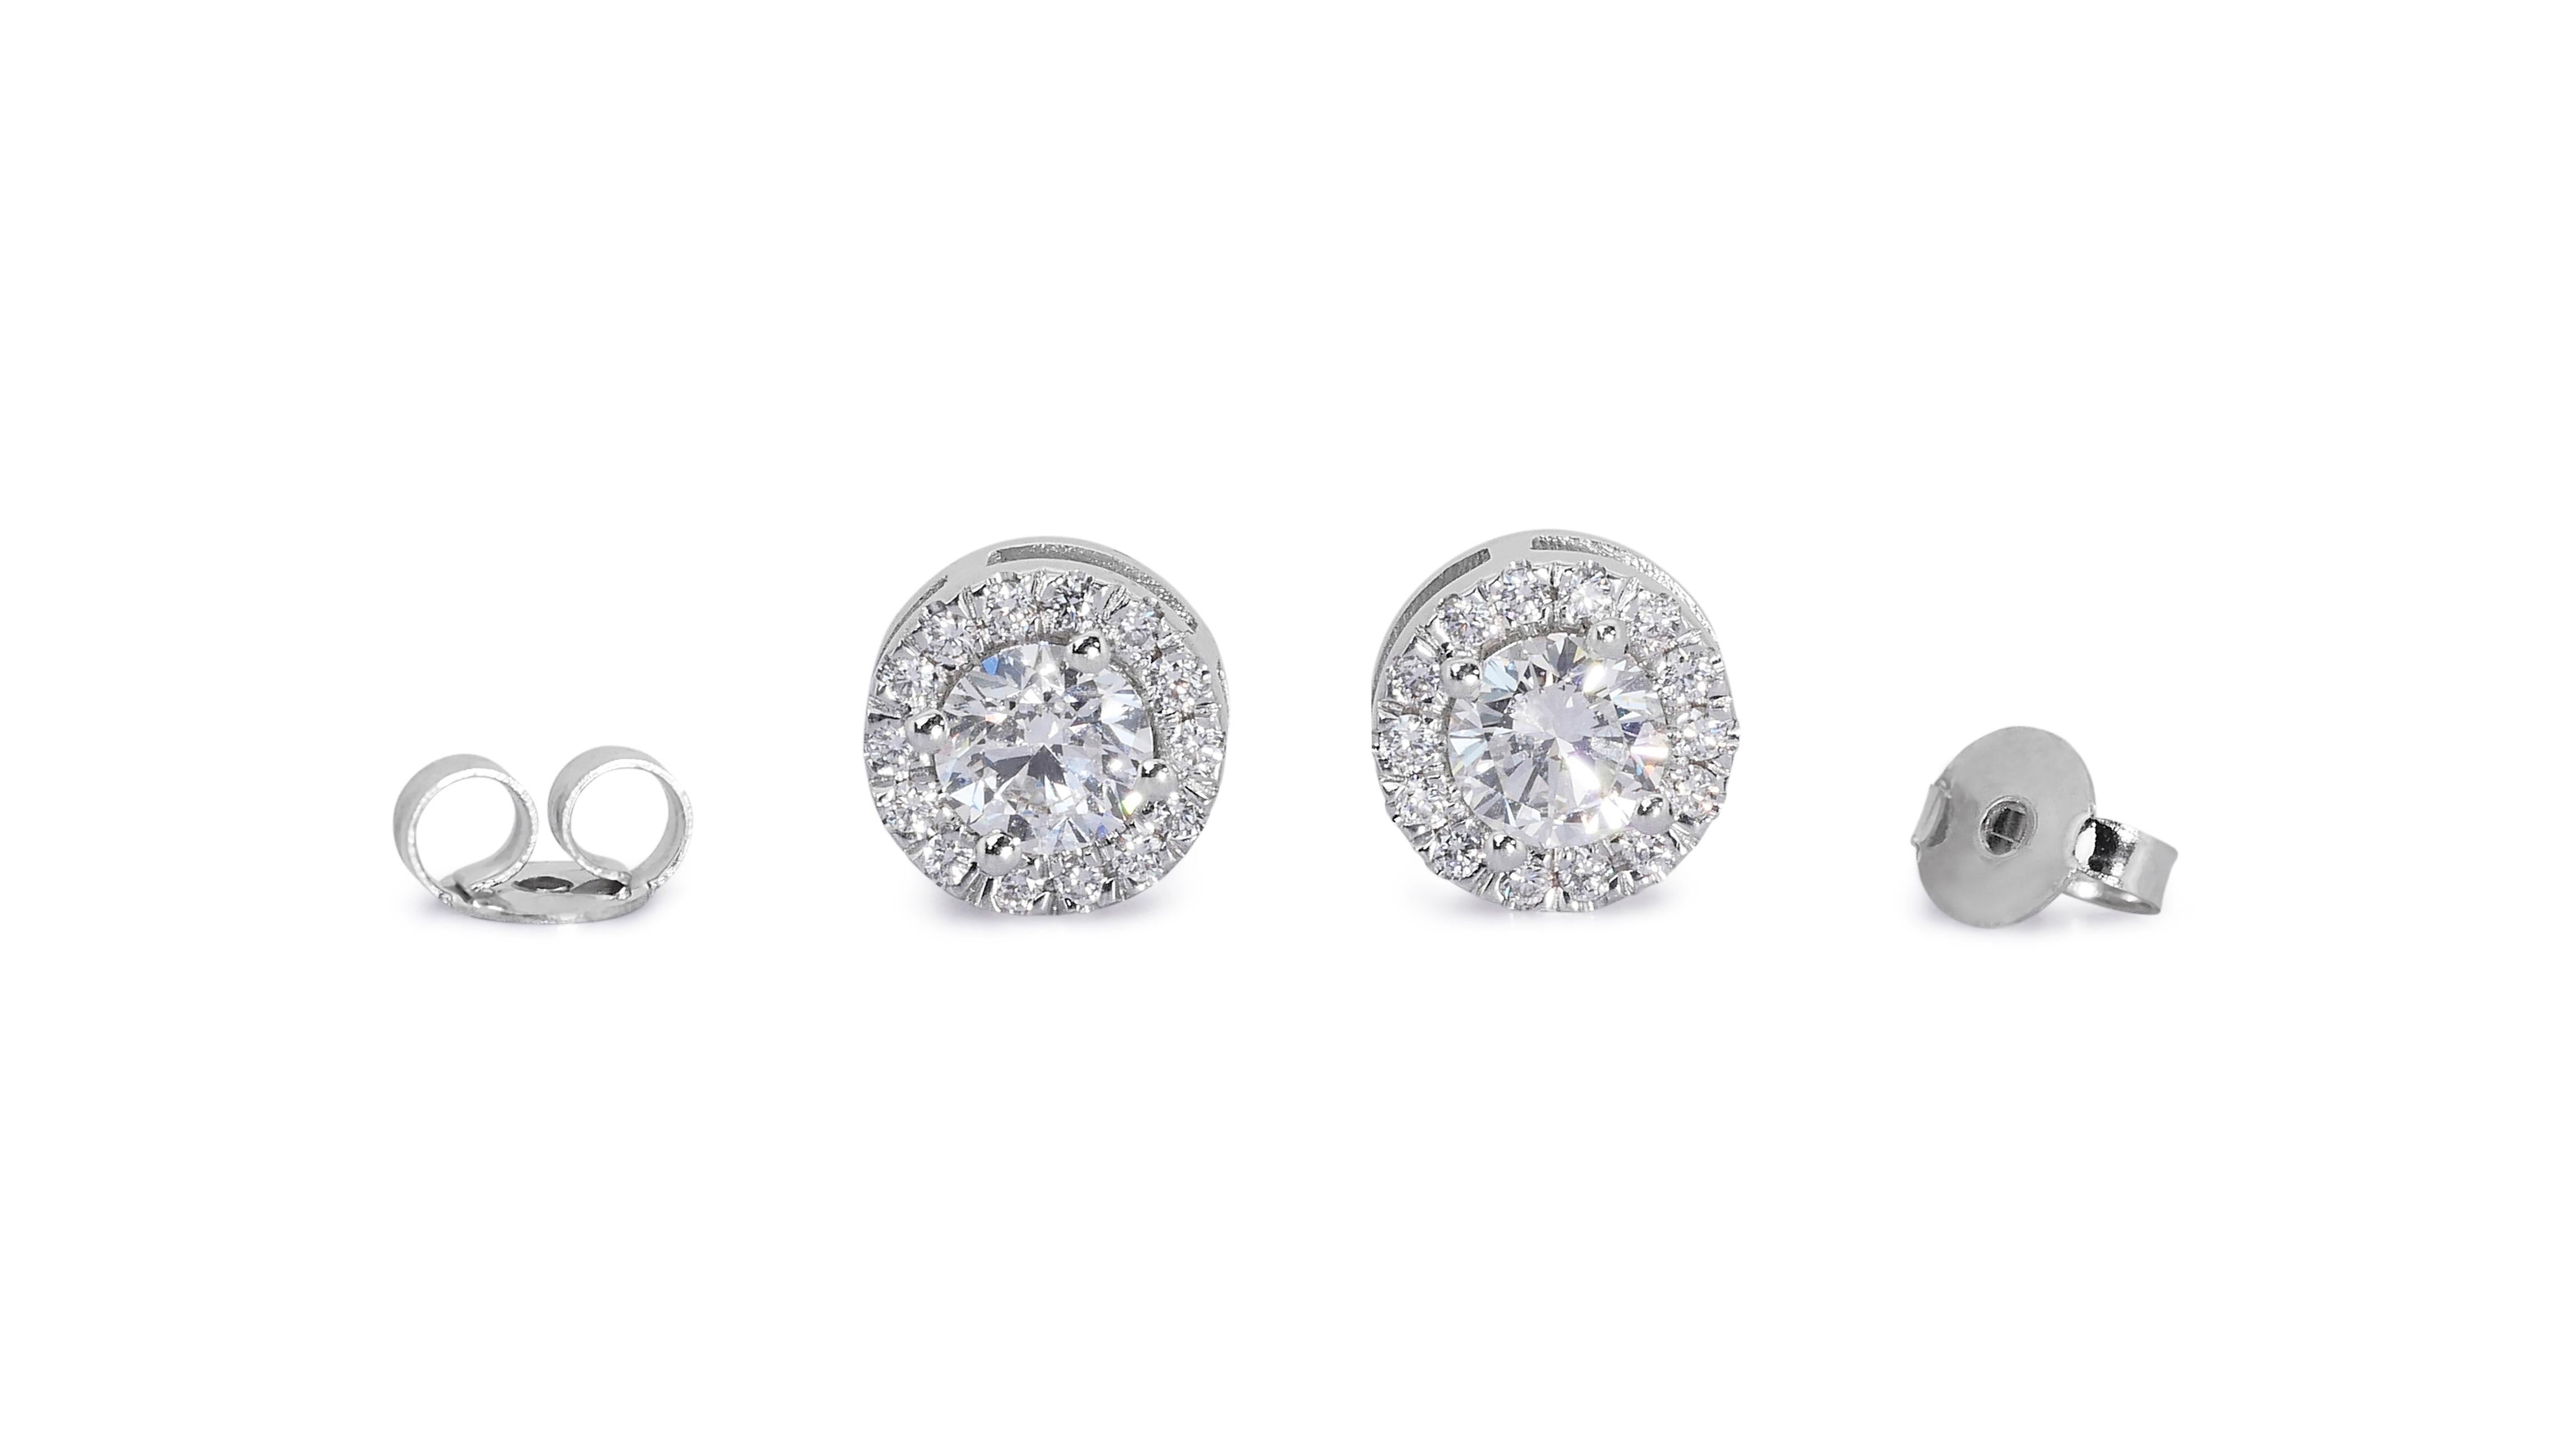 Glamorous 18k White Gold Halo Earrings w/ 1.05 Carat Natural Diamonds GIA Cert For Sale 5